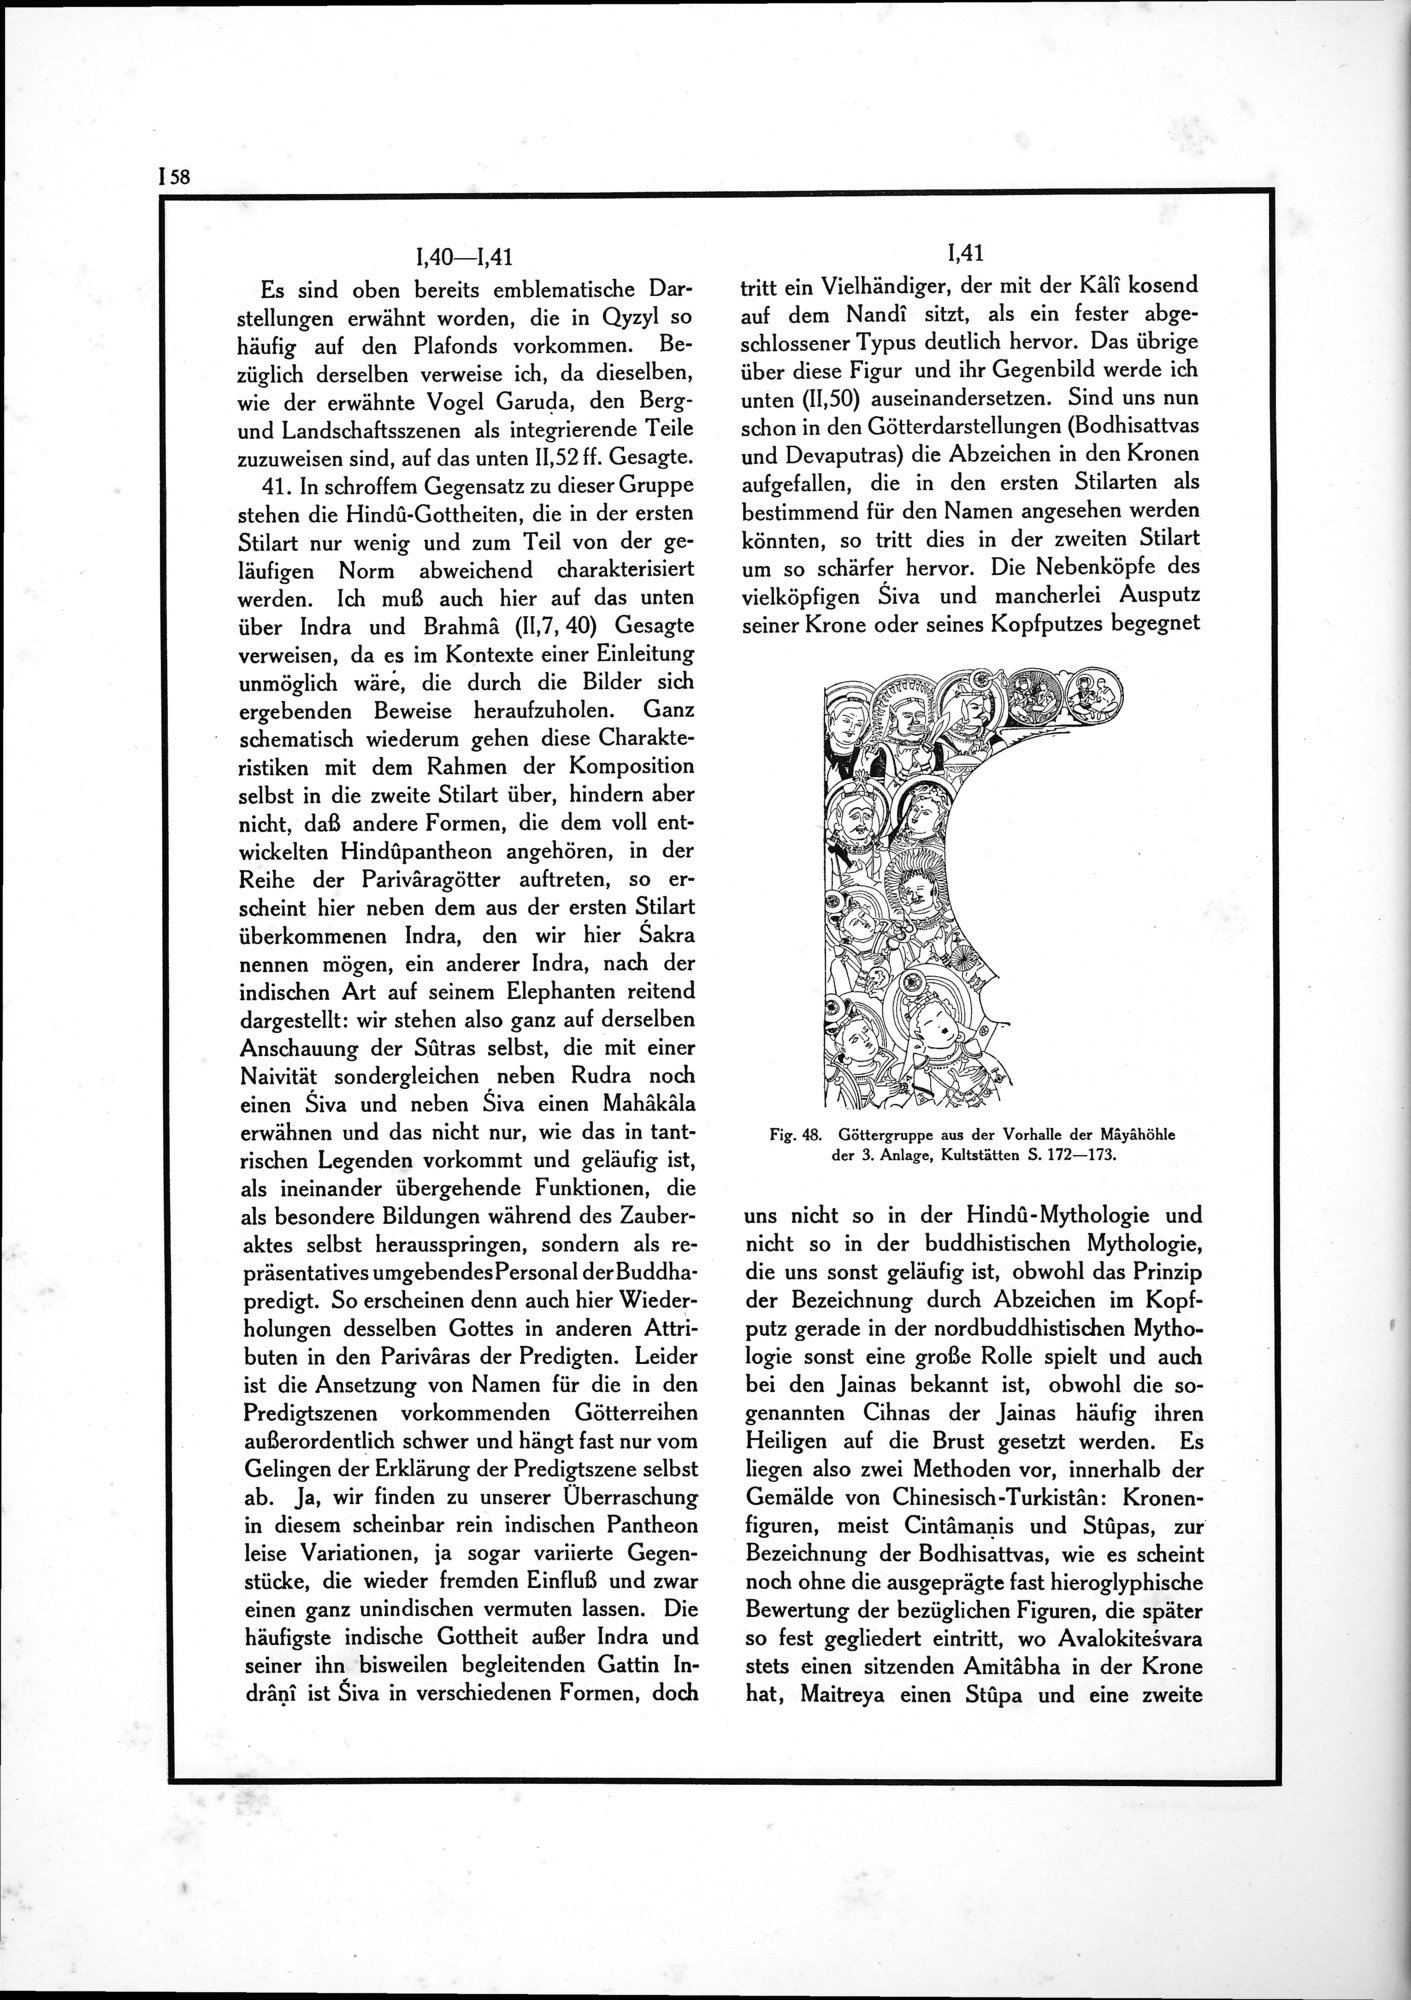 Alt-Kutscha : vol.1 / Page 70 (Grayscale High Resolution Image)